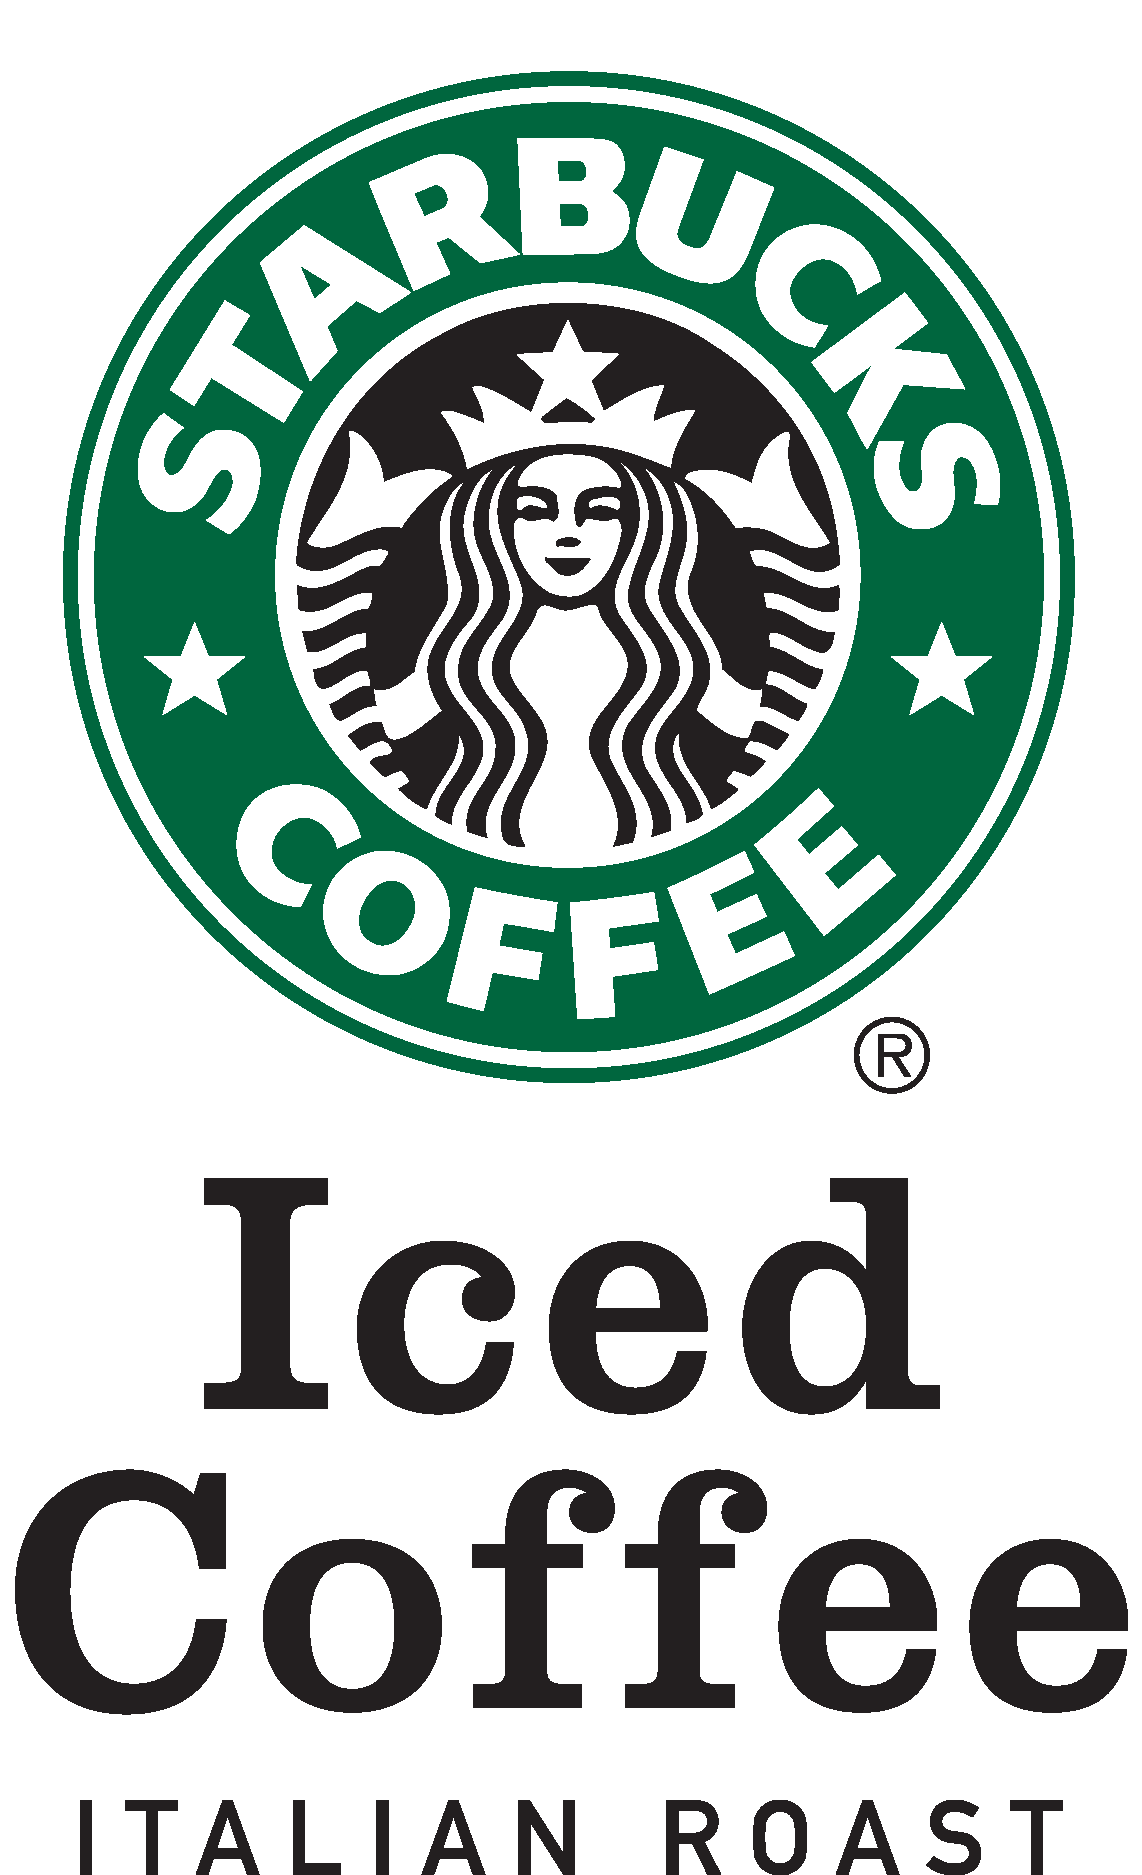 starbucks coffee logo